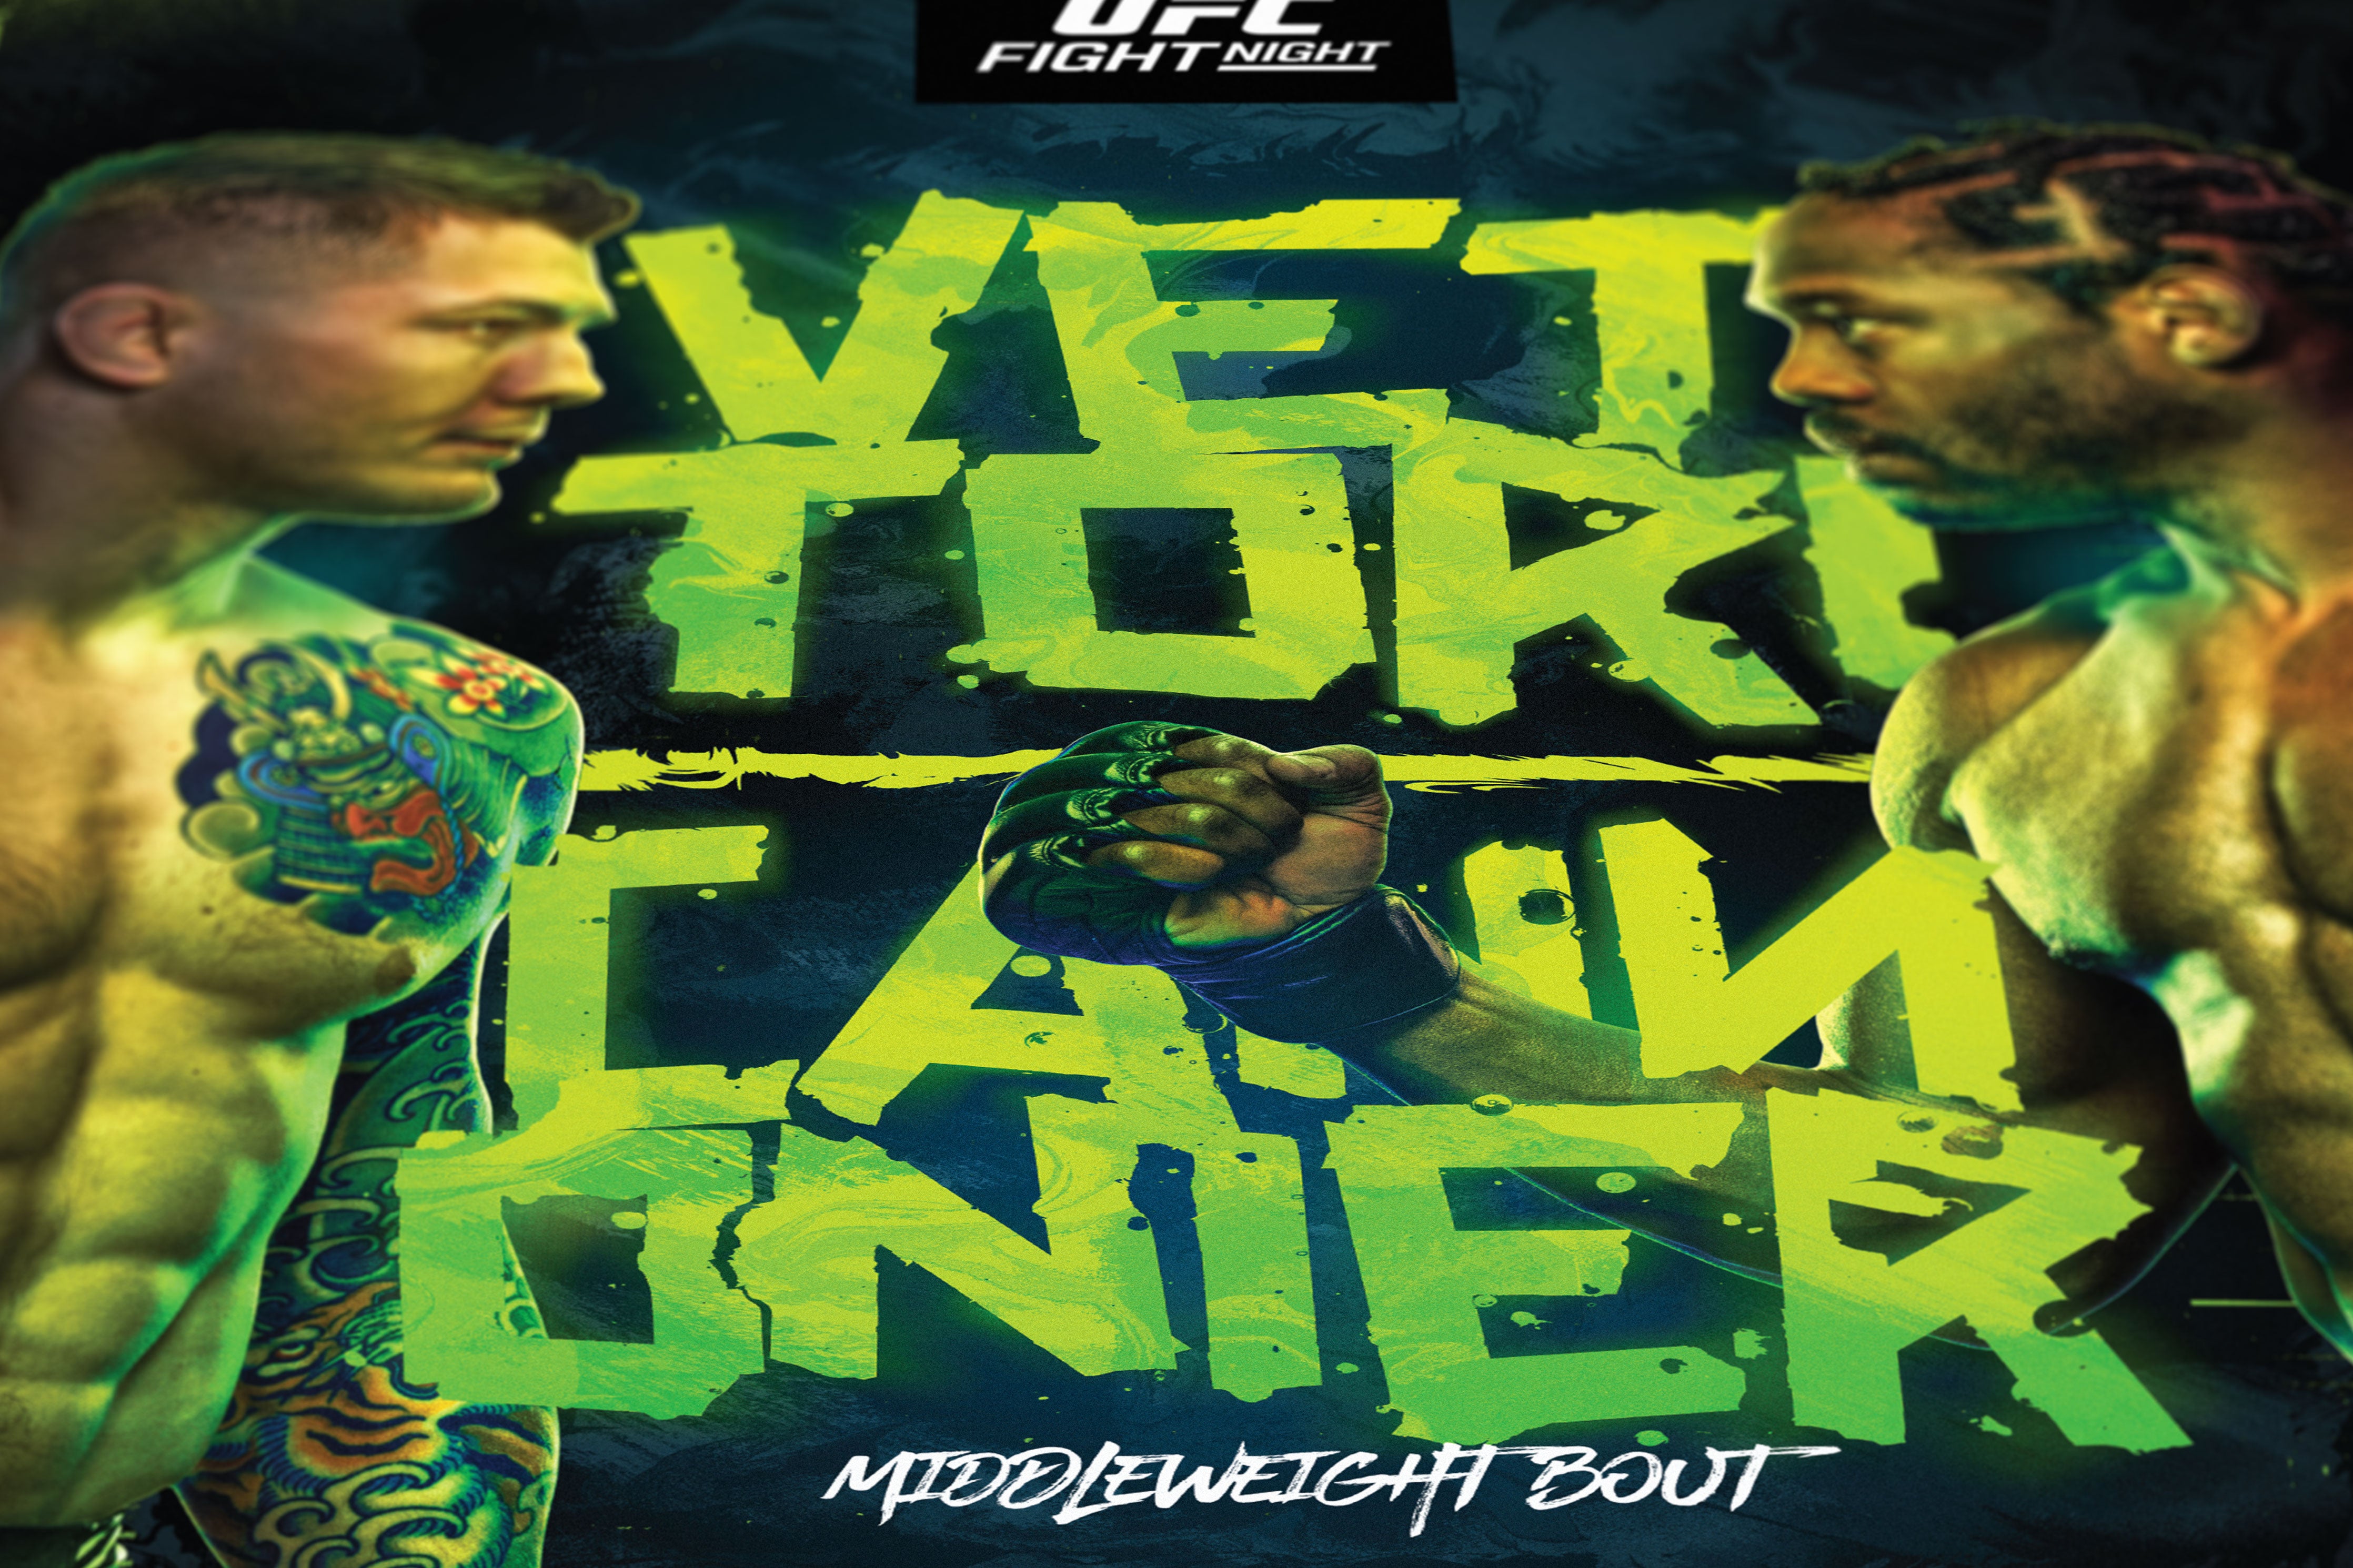 UFC Fight Night: Vettori vs Cannonier Autographed Event Poster